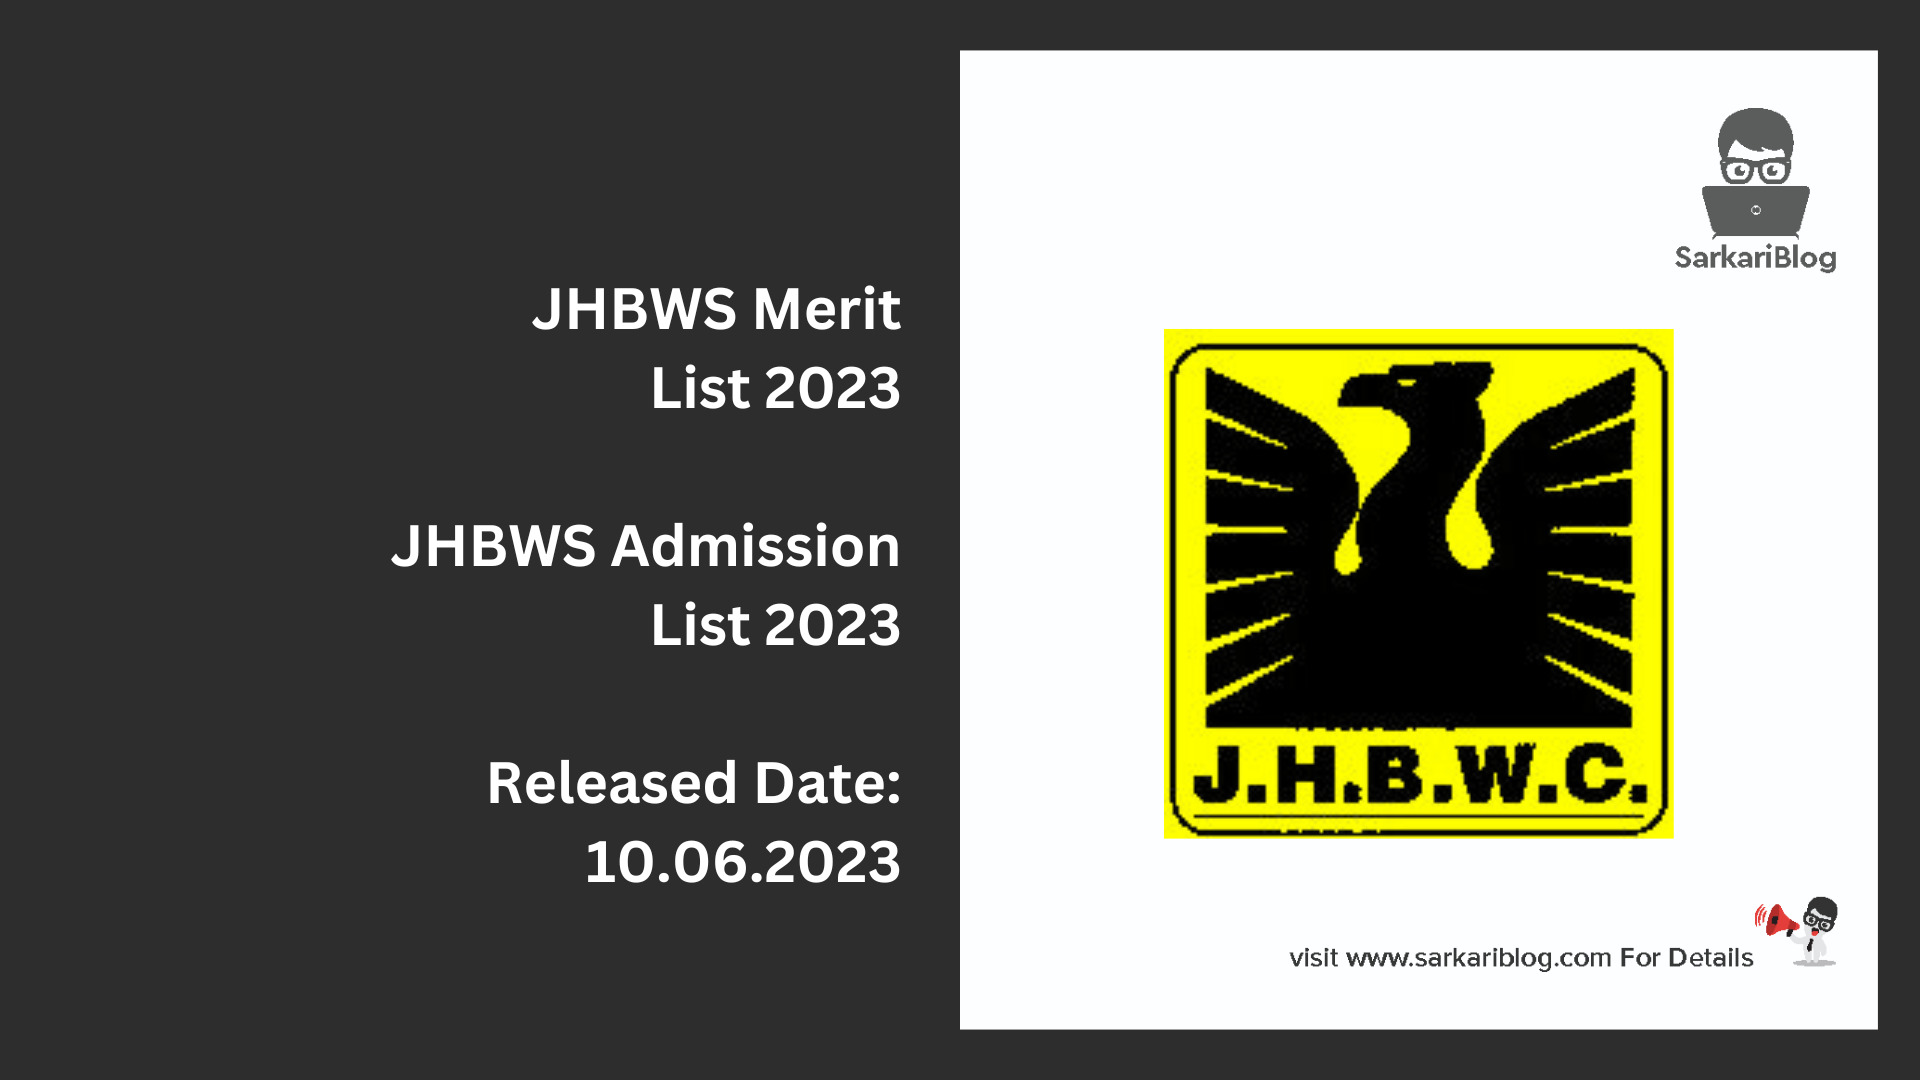 JHBWS Merit List 2023